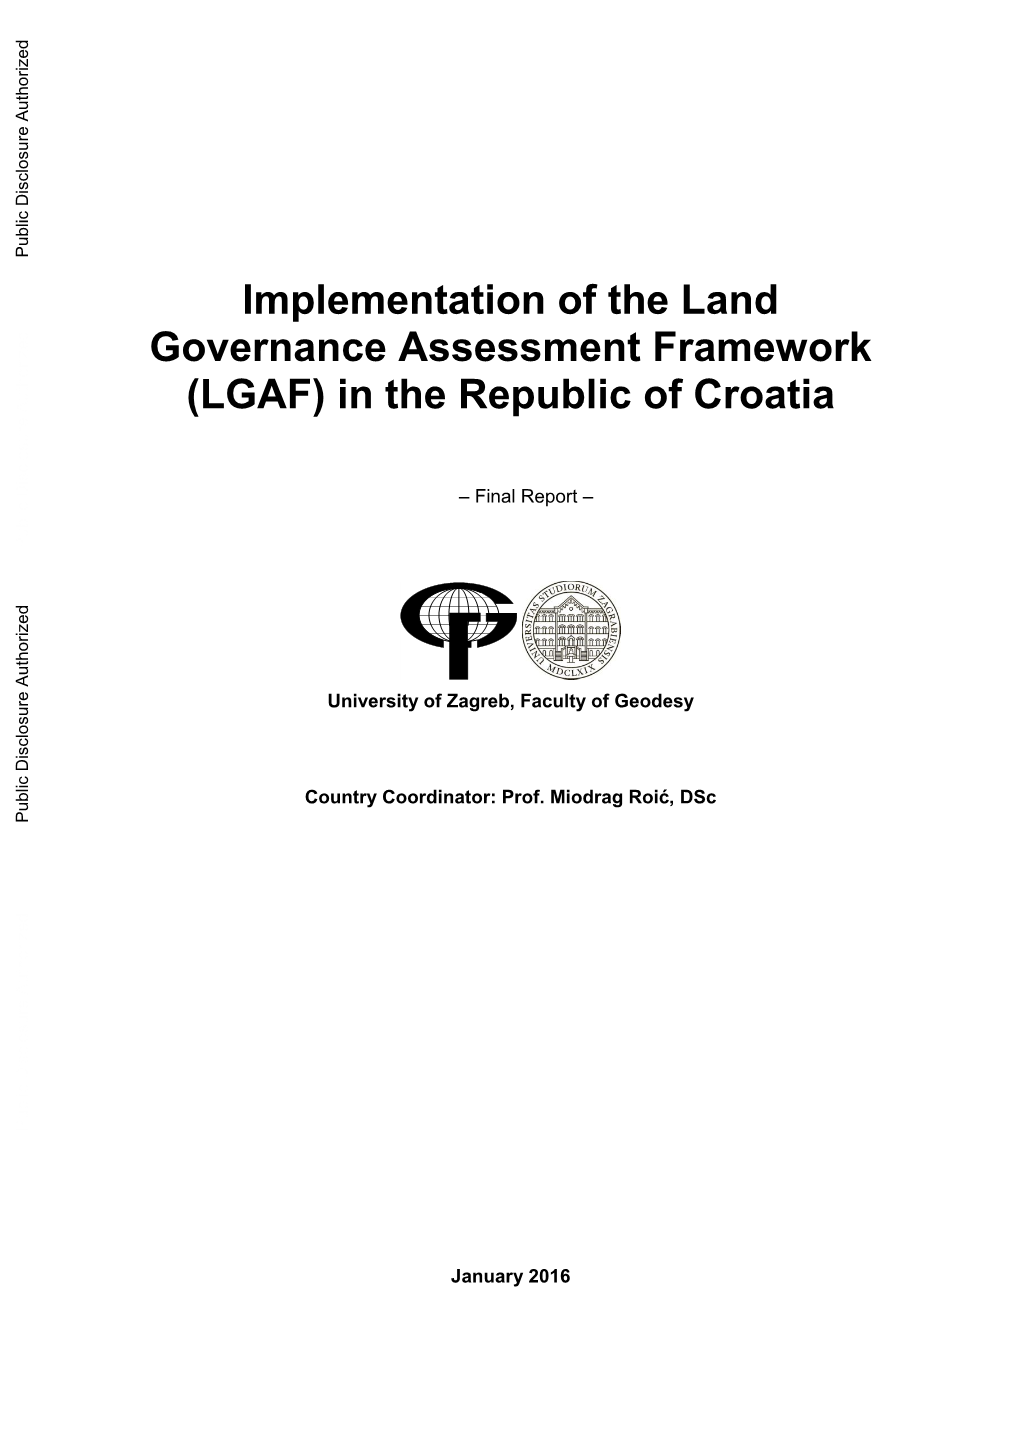 Implementation of the Land Governance Assessment Framework (LGAF) in the Republic of Croatia